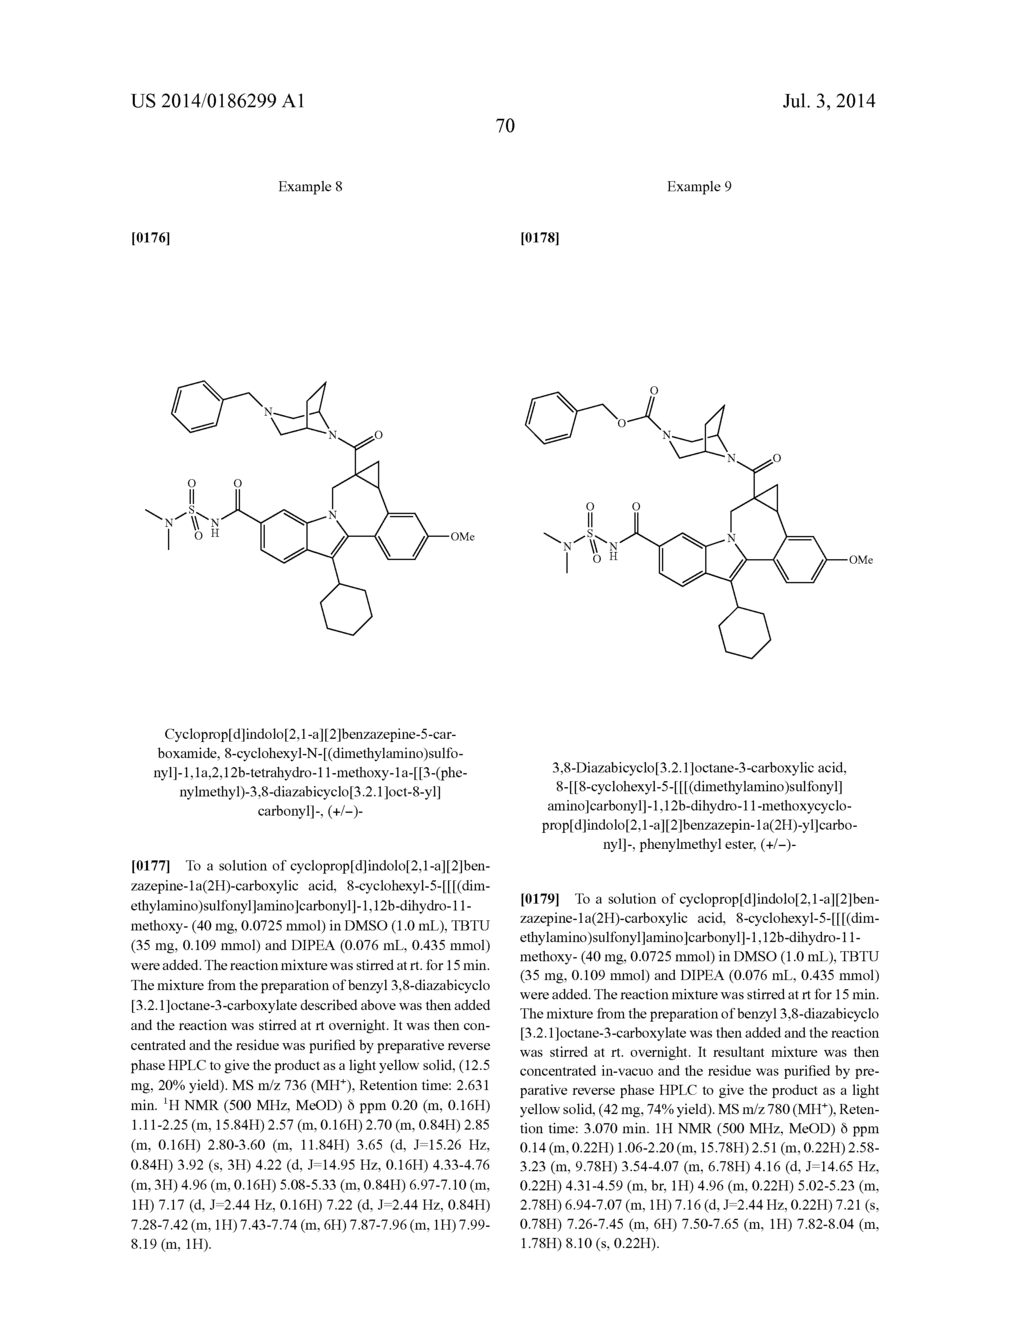 Cyclopropyl Fused Indolobenzazepine HCV NS5B Inhibitors - diagram, schematic, and image 71